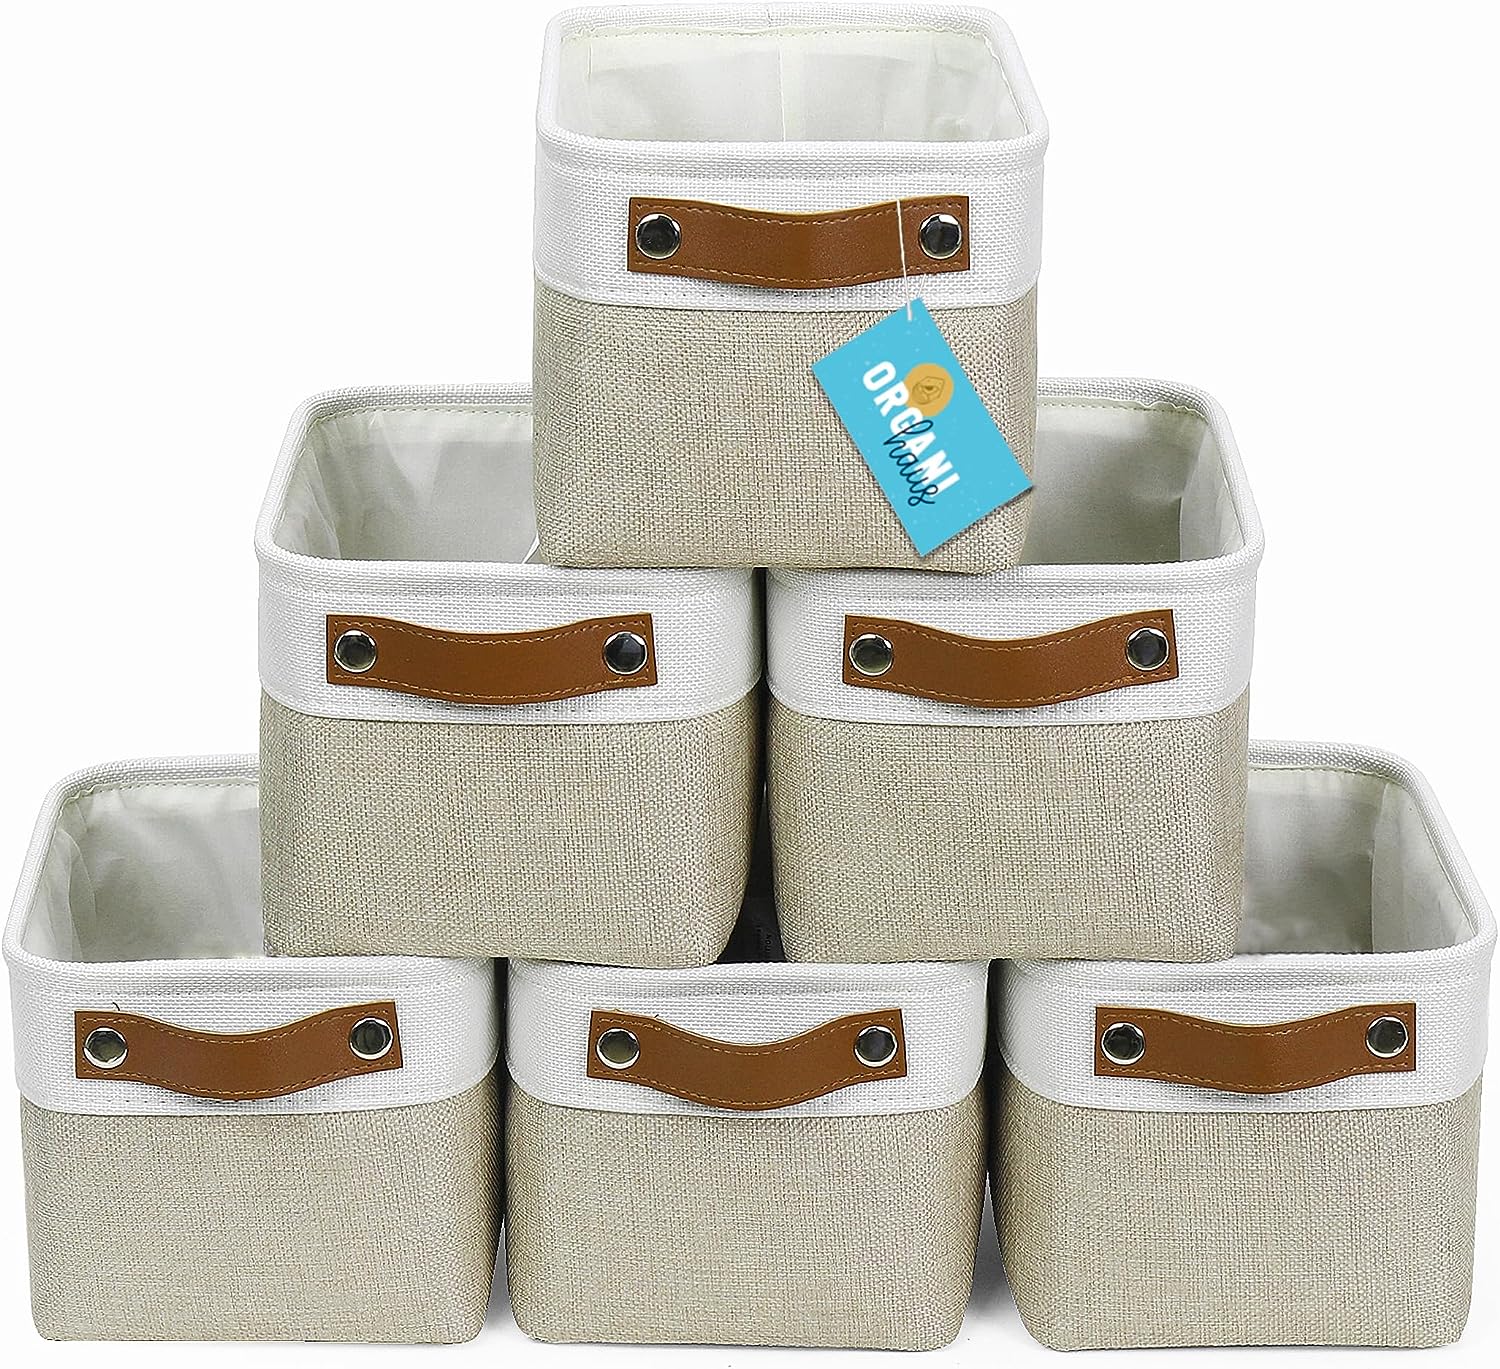 Blushbees® Medium Fabric Storage Baskets - 3 Pack (Navy Blue/White)